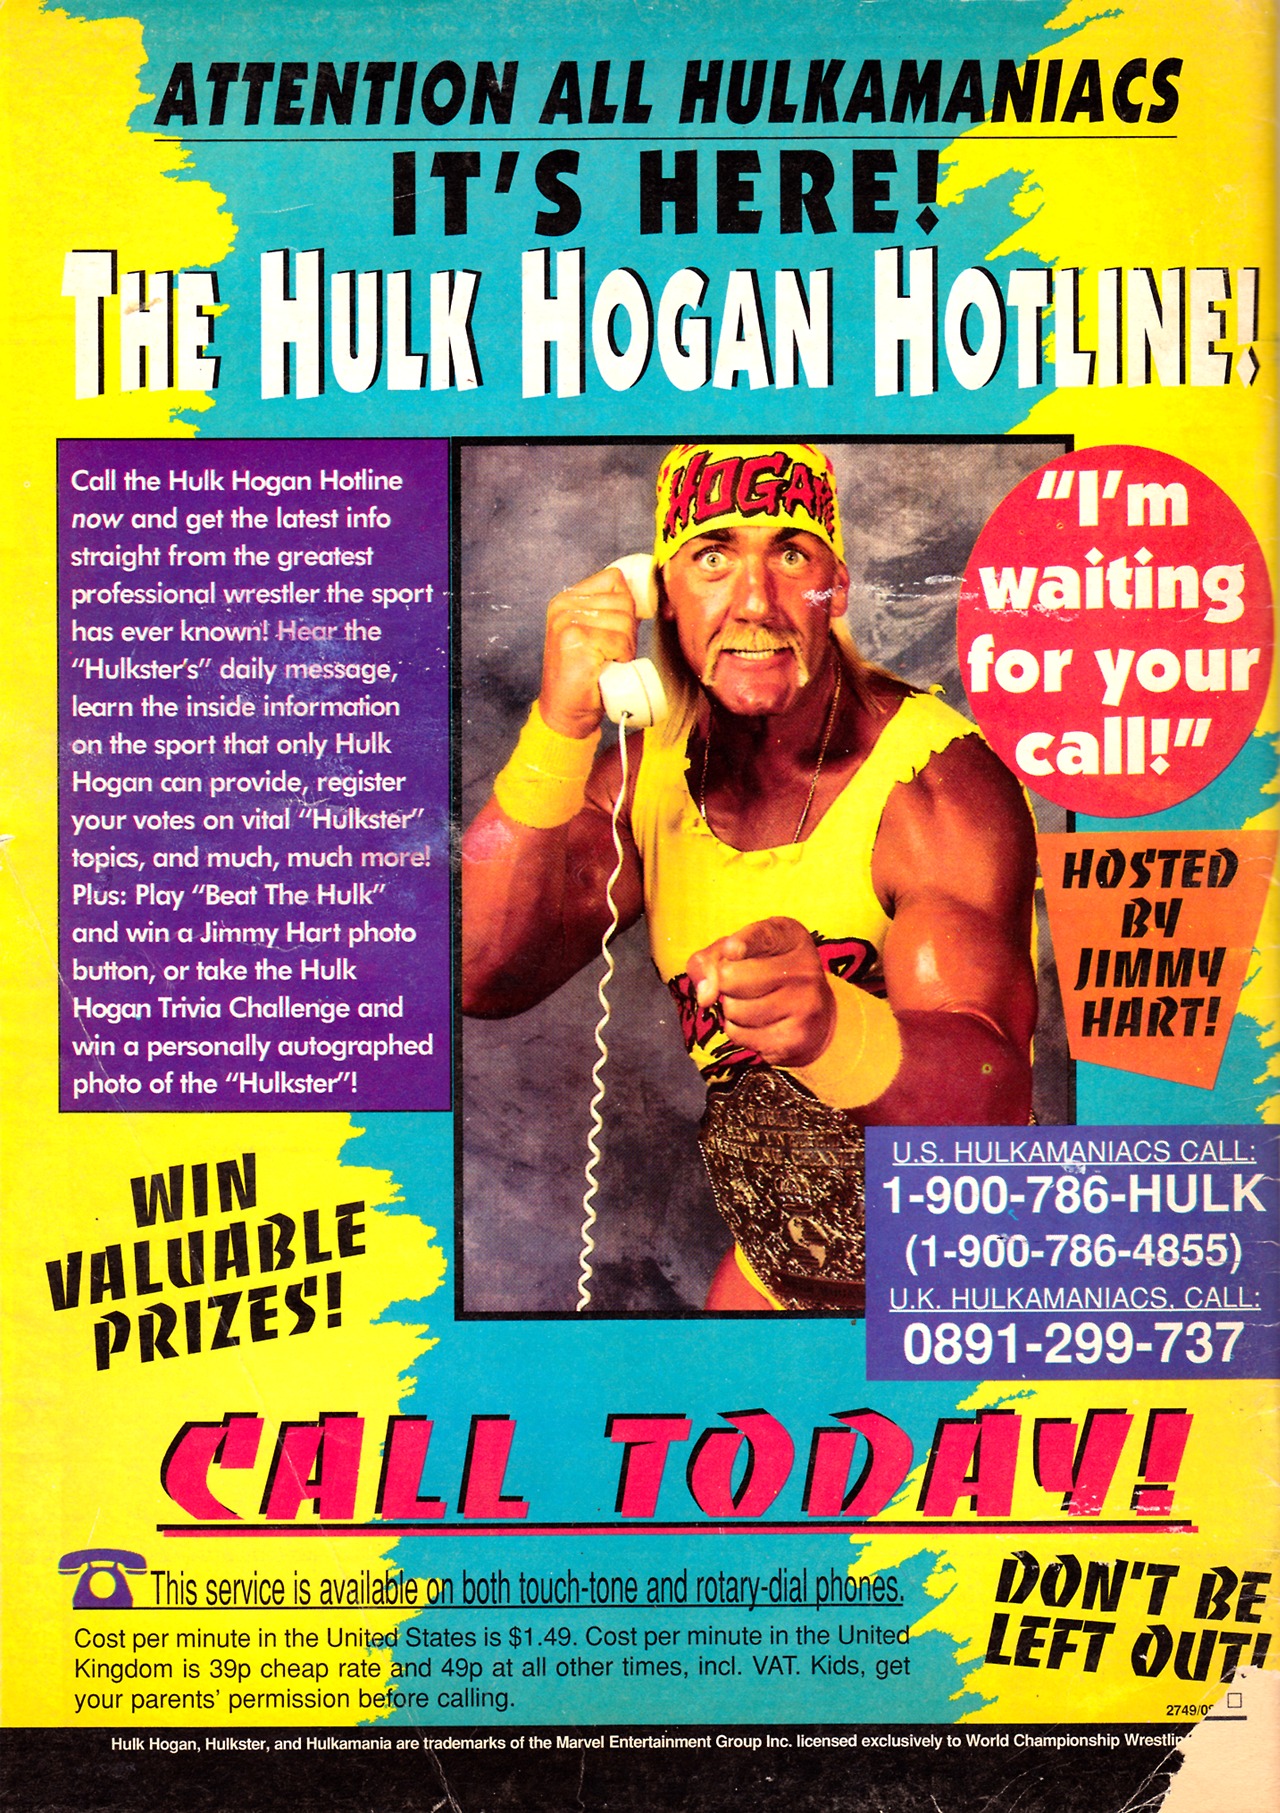 WCW Hulk Hogan hotline